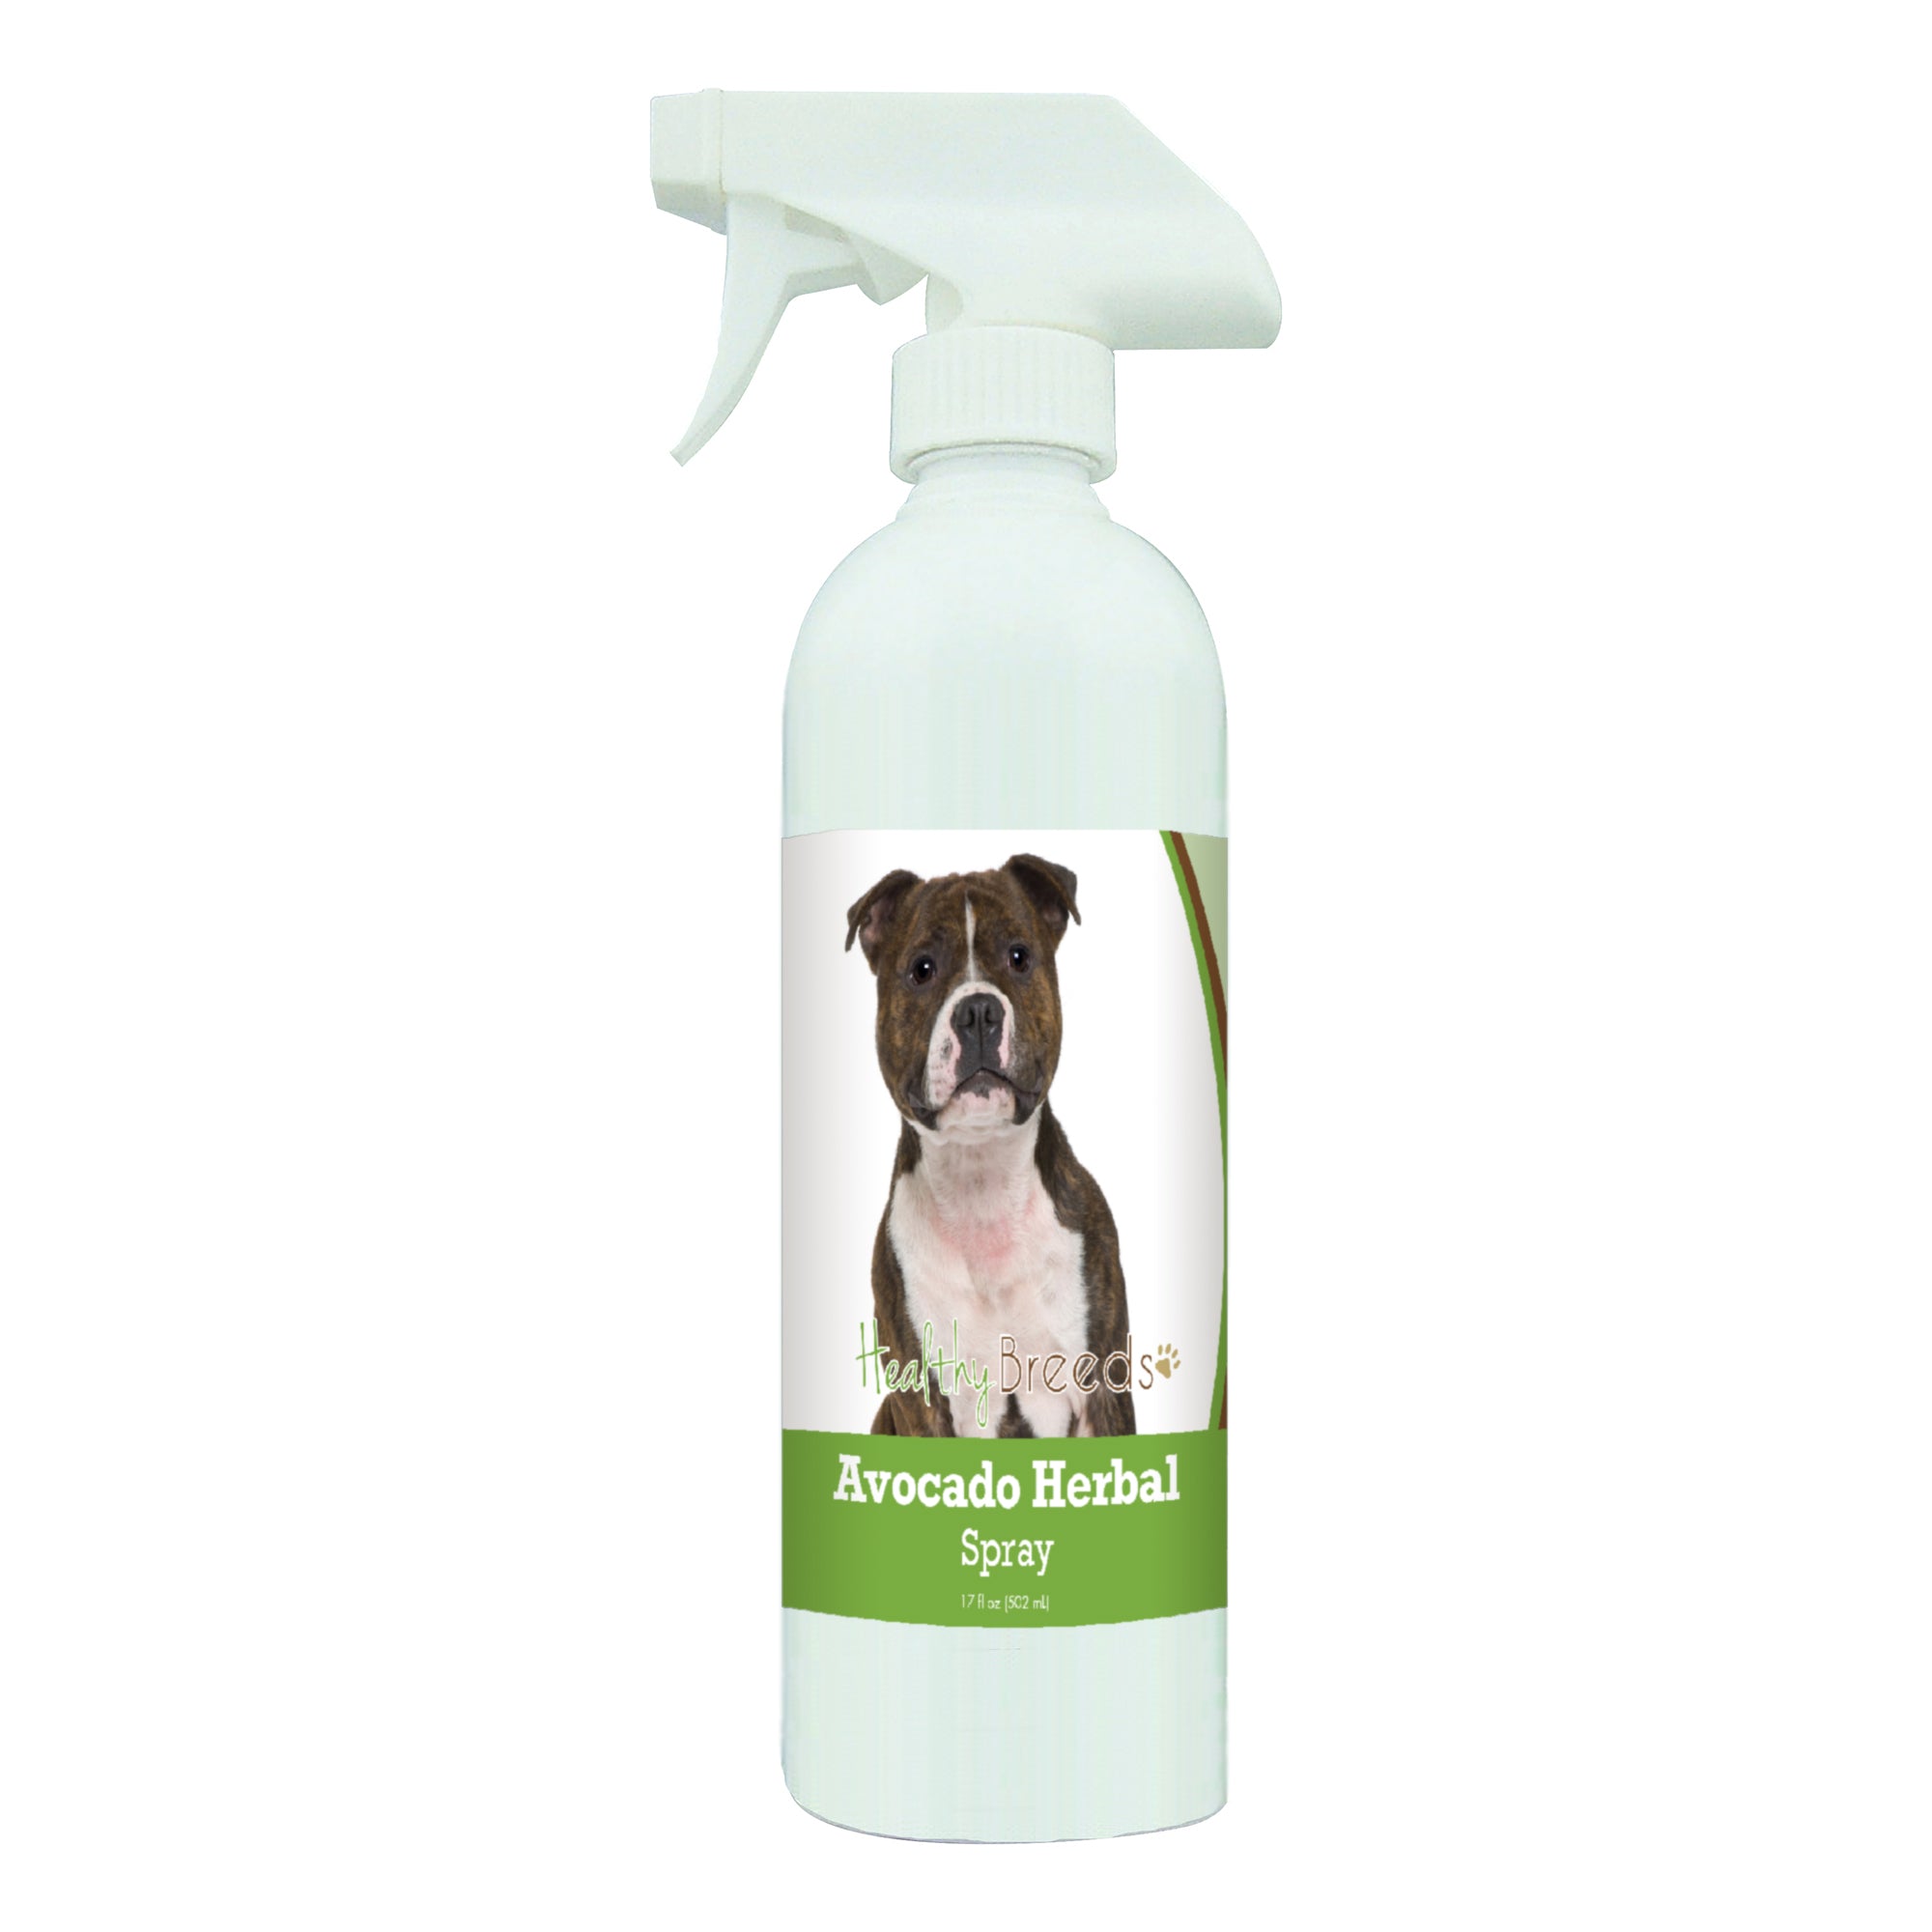 Staffordshire Bull Terrier Avocado Herbal Spray 17 oz